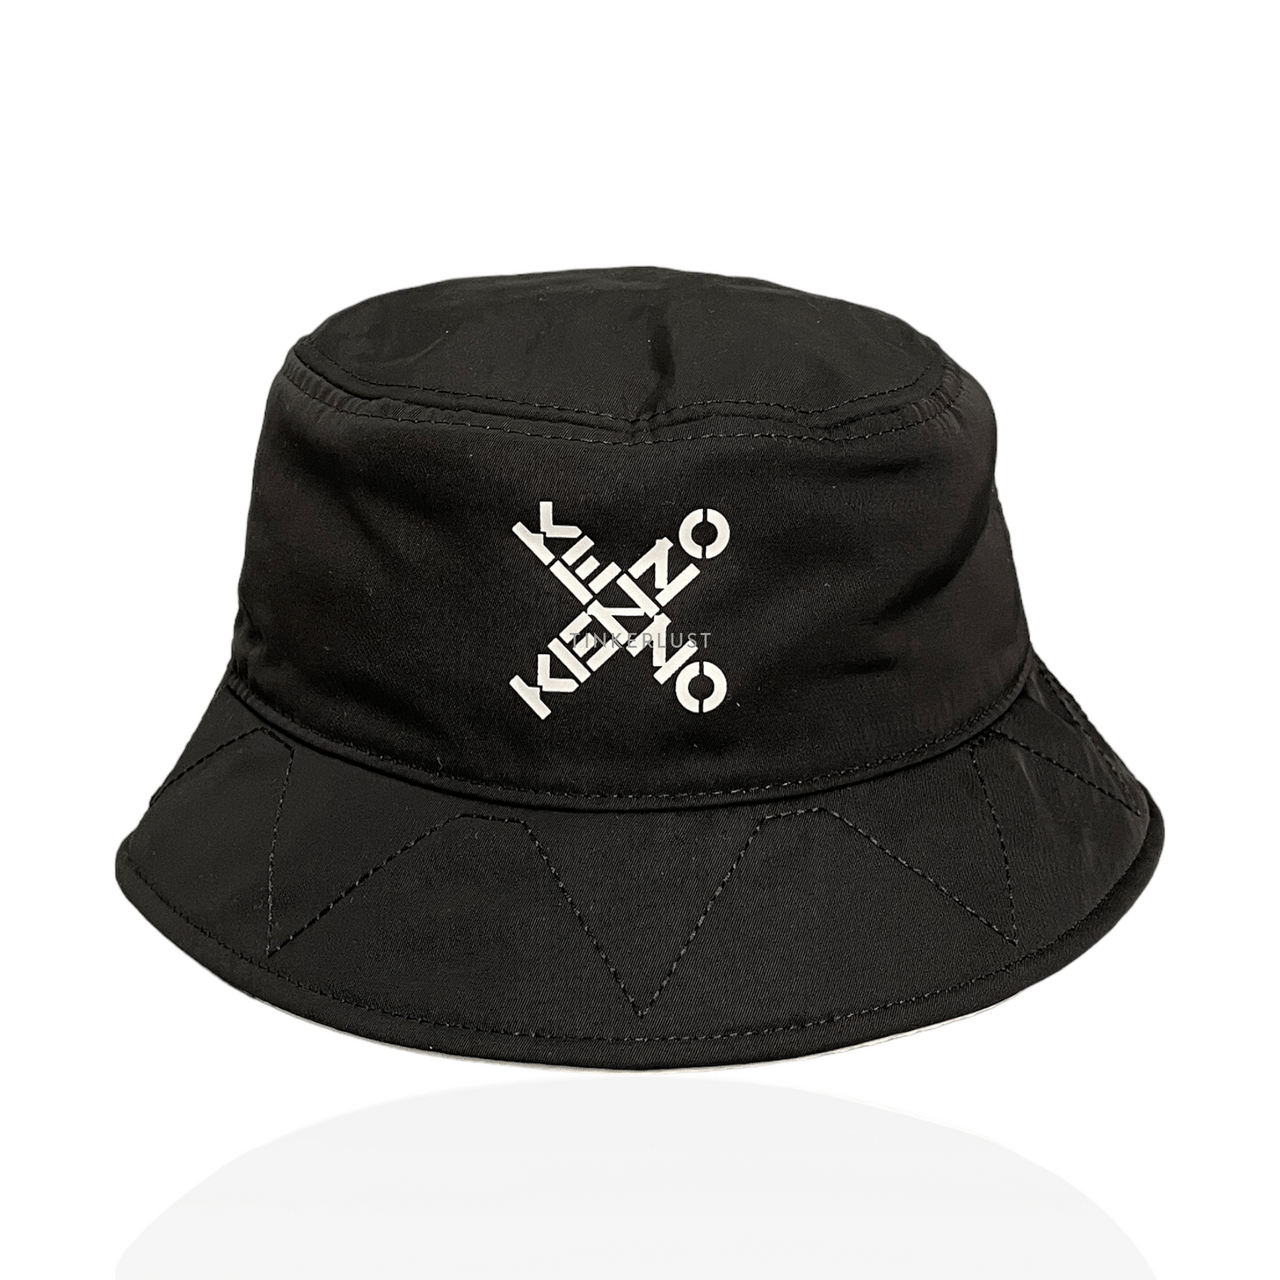 Kenzo Black & White Reversible Bucket Hats